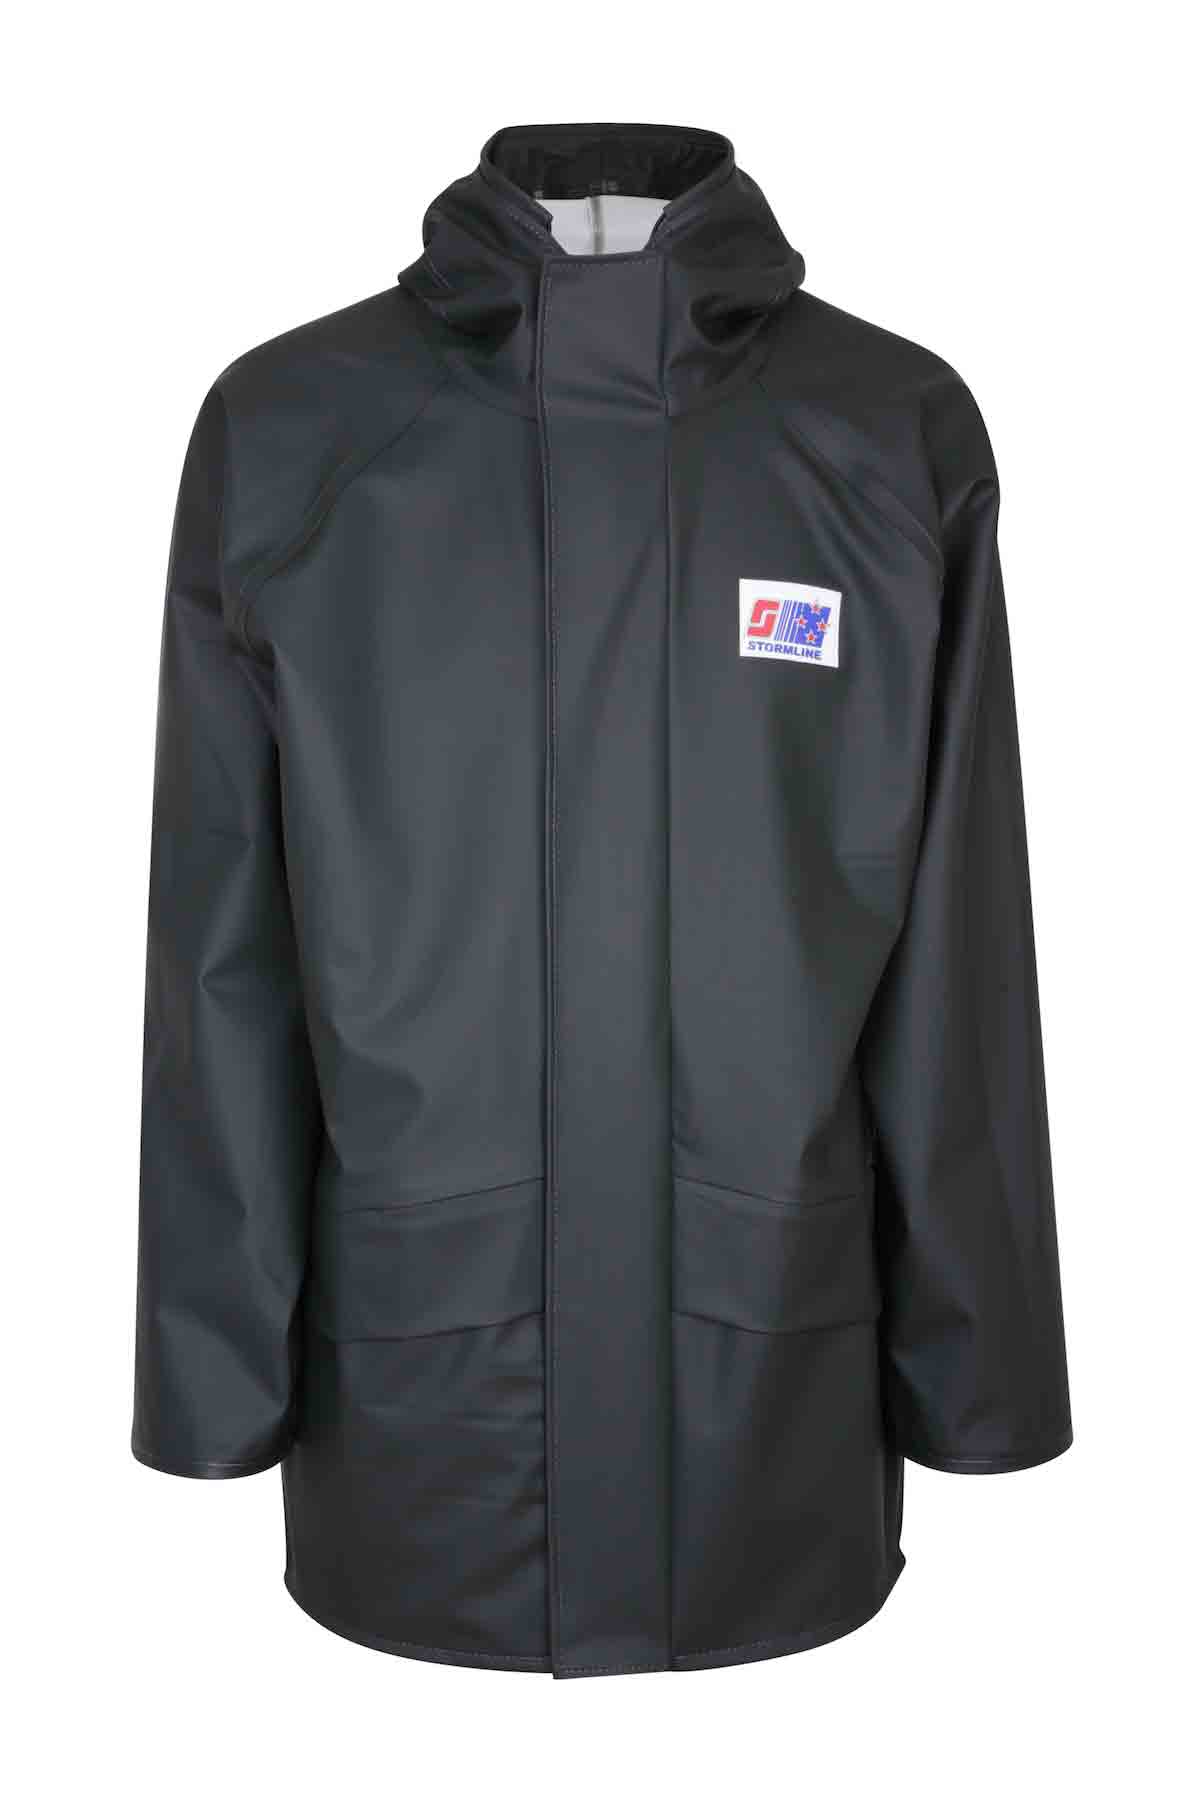 Sea Angling Stormline 219G Stormtex PVC Waterproof Workwear Jacket for Farming 